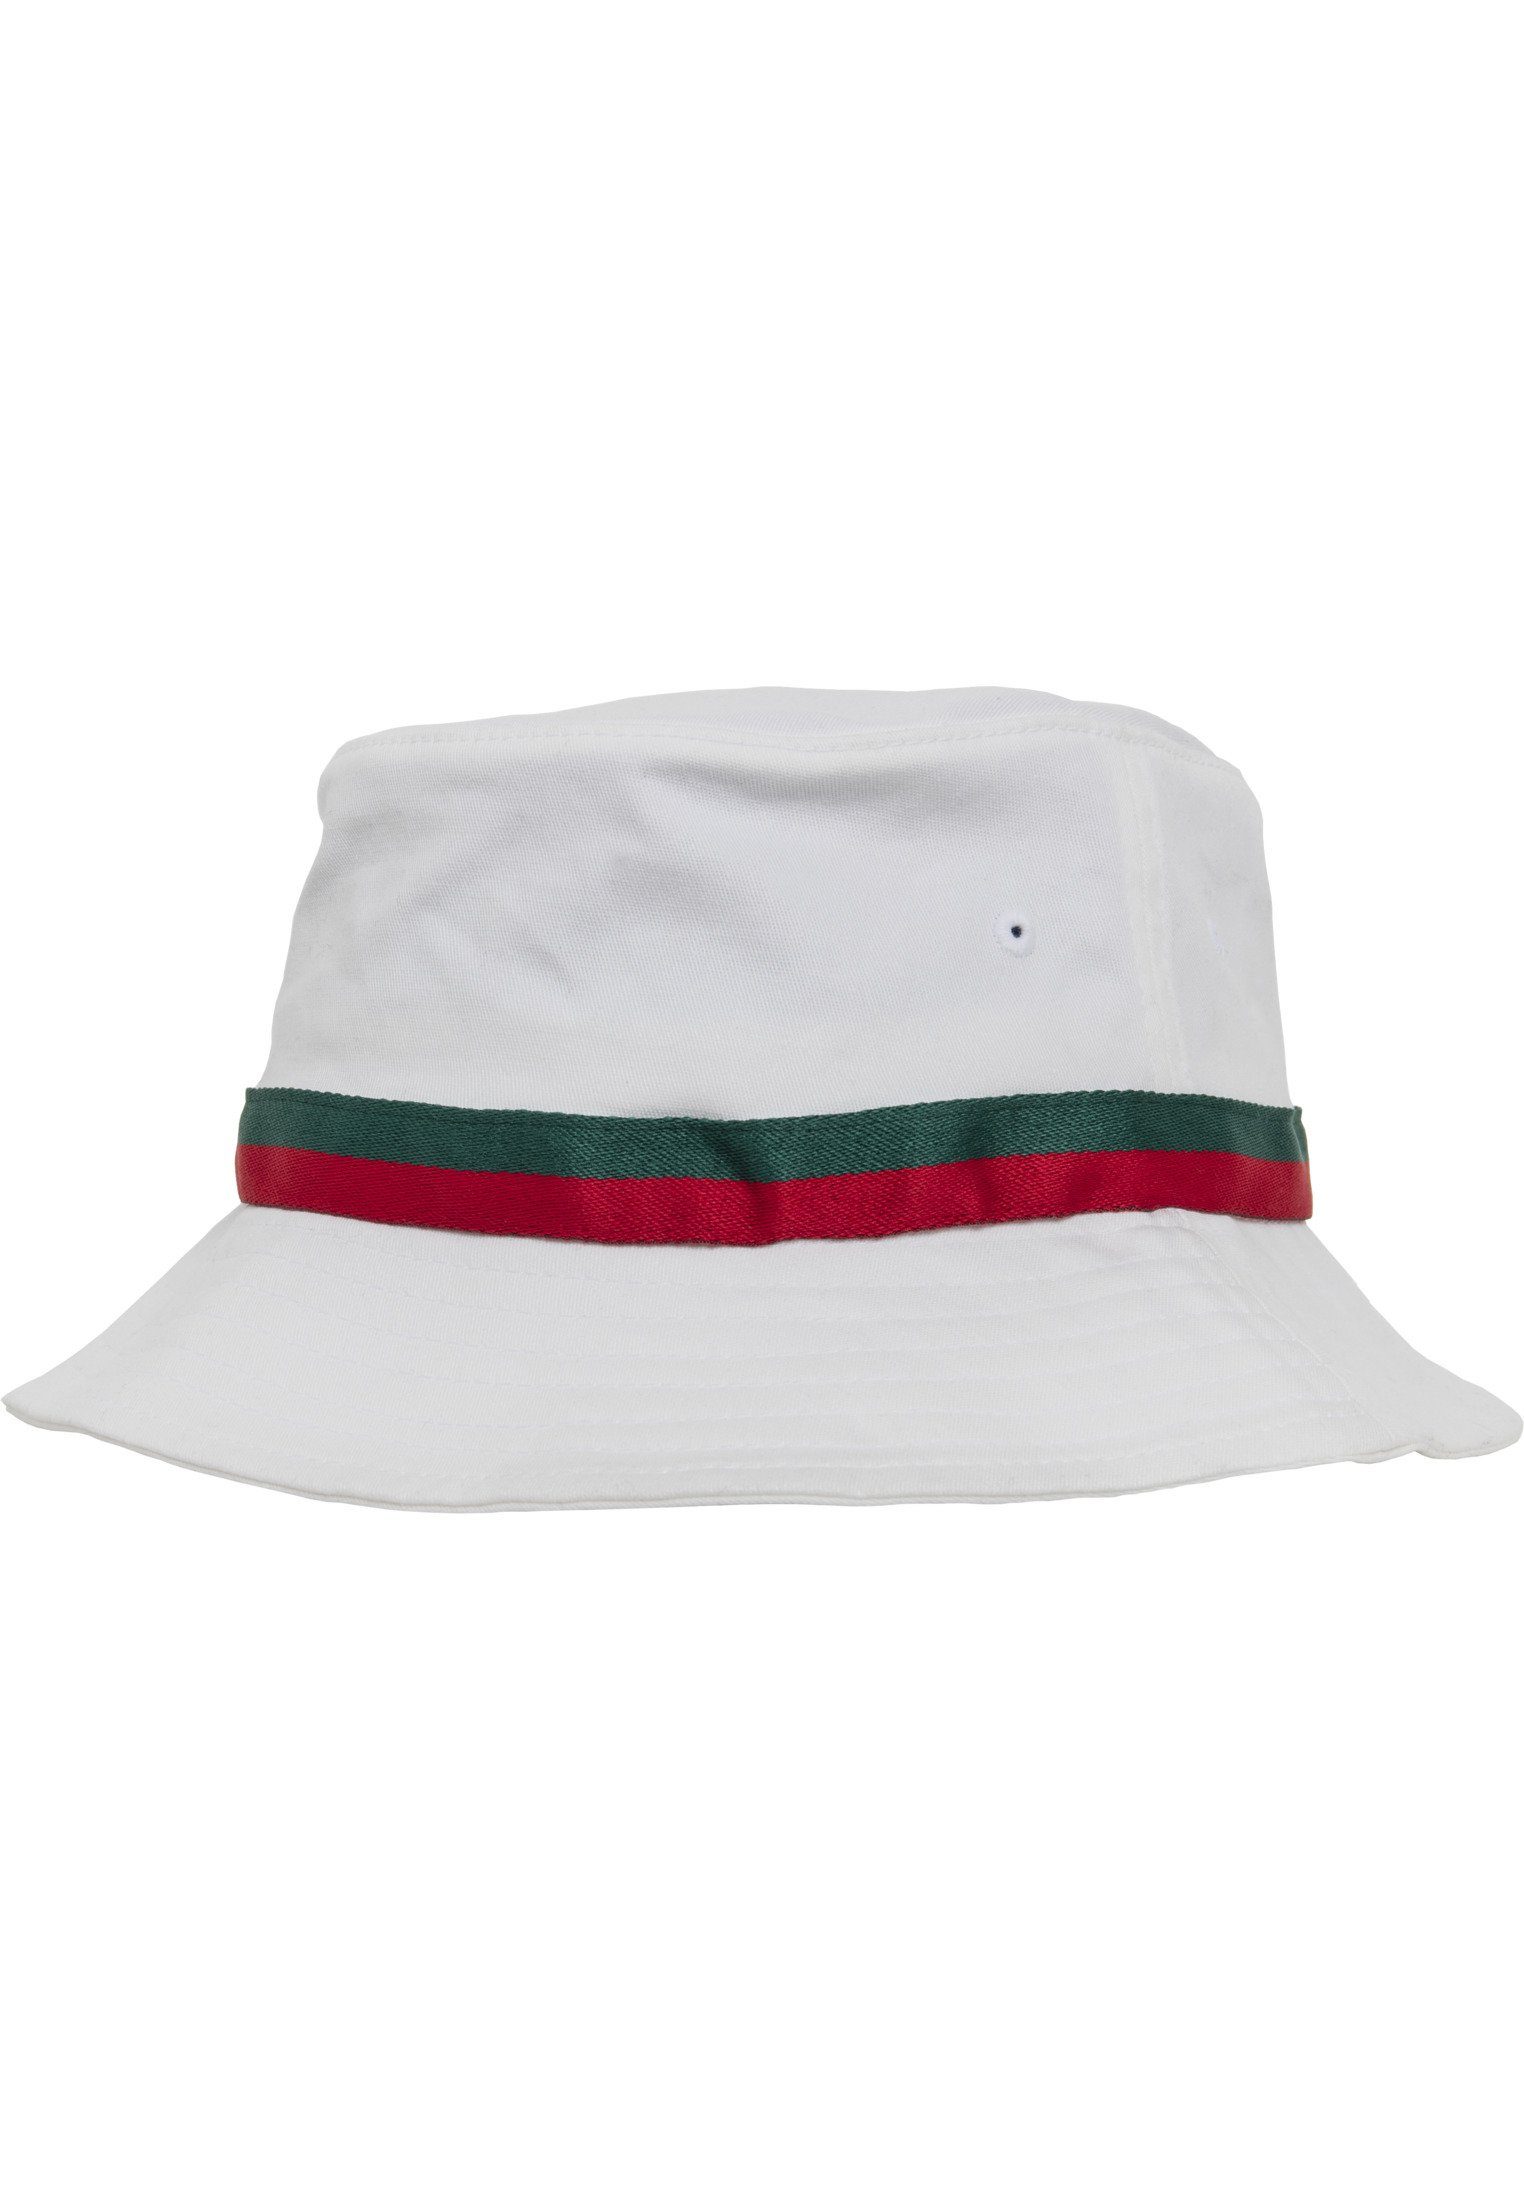 Flexfit Flex Bucket Bucket Hat Cap white/firered/green Hat Stripe